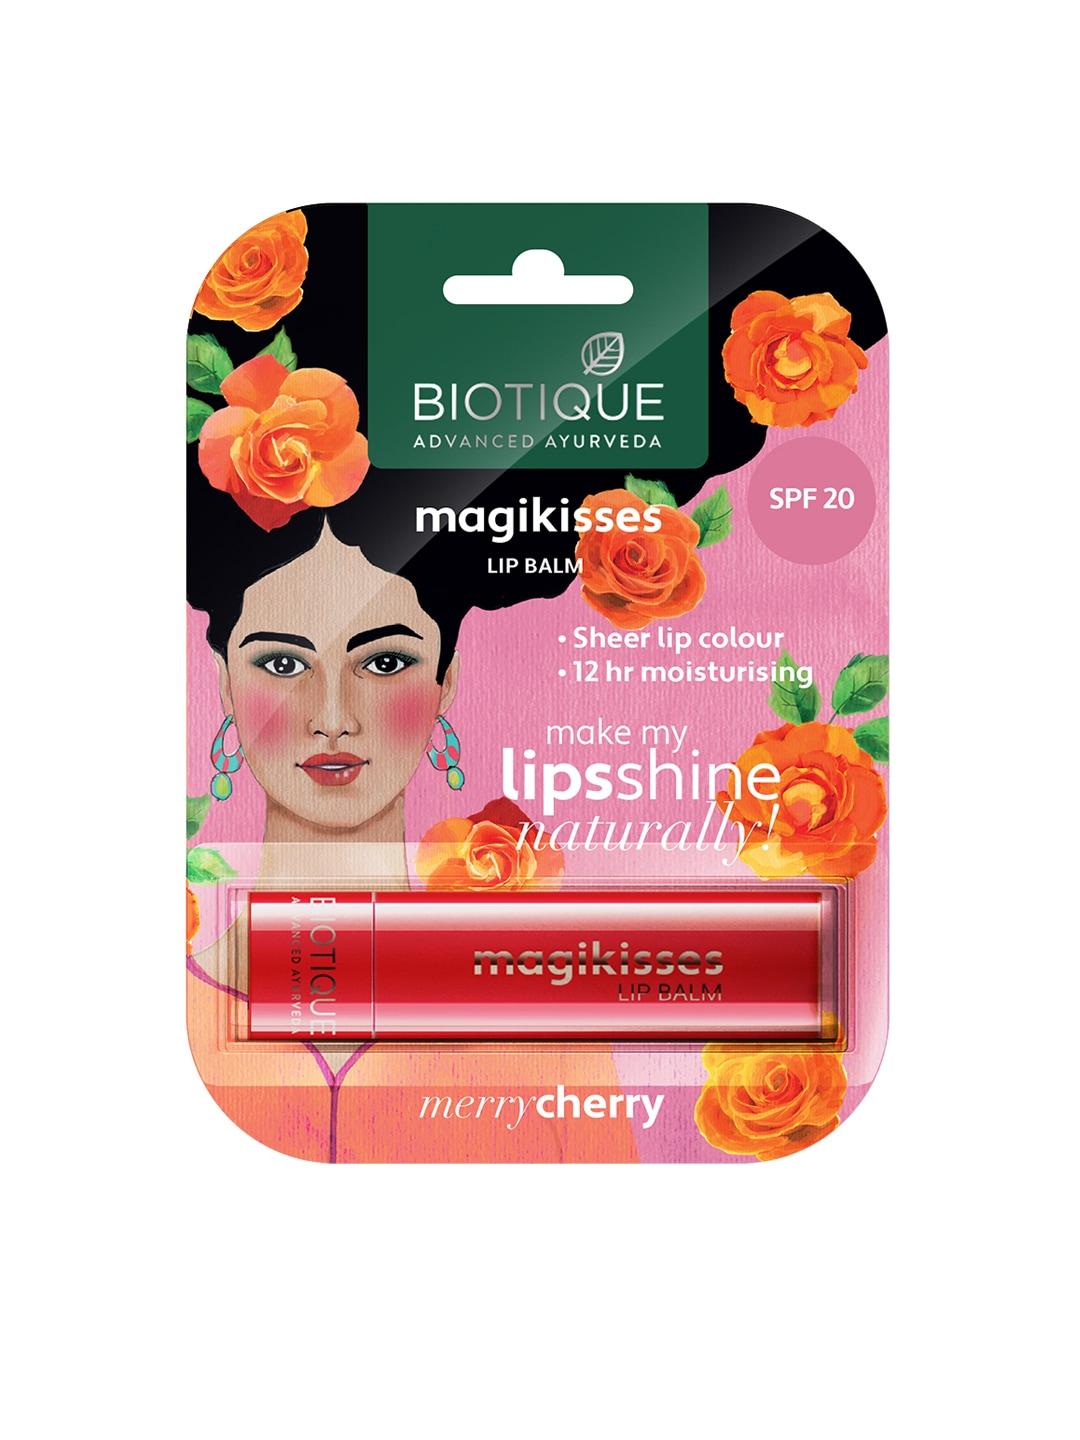 Biotique Magikisses SPF 20 Moisturising Sheer Lip Balm - Merry Cherry